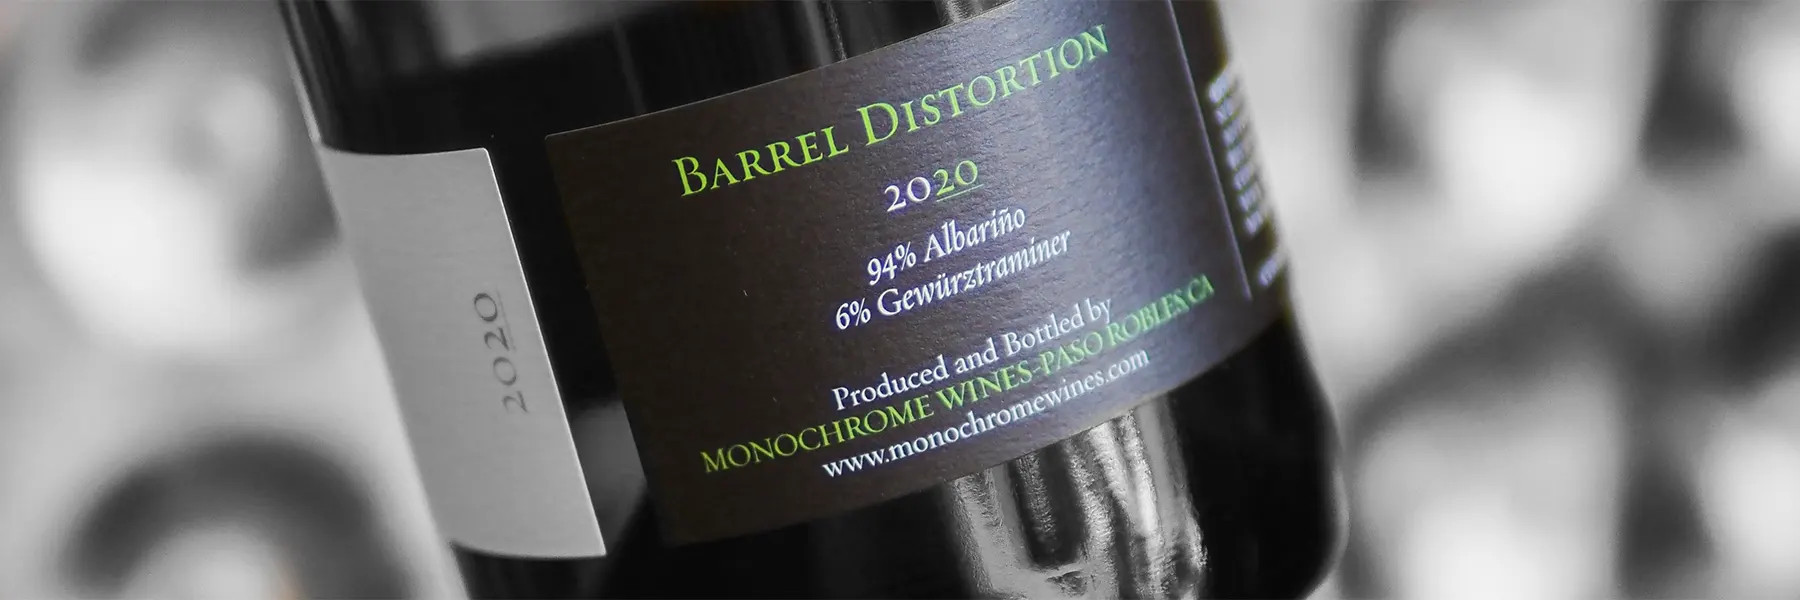 Barrel Distortion Albarino White Wine